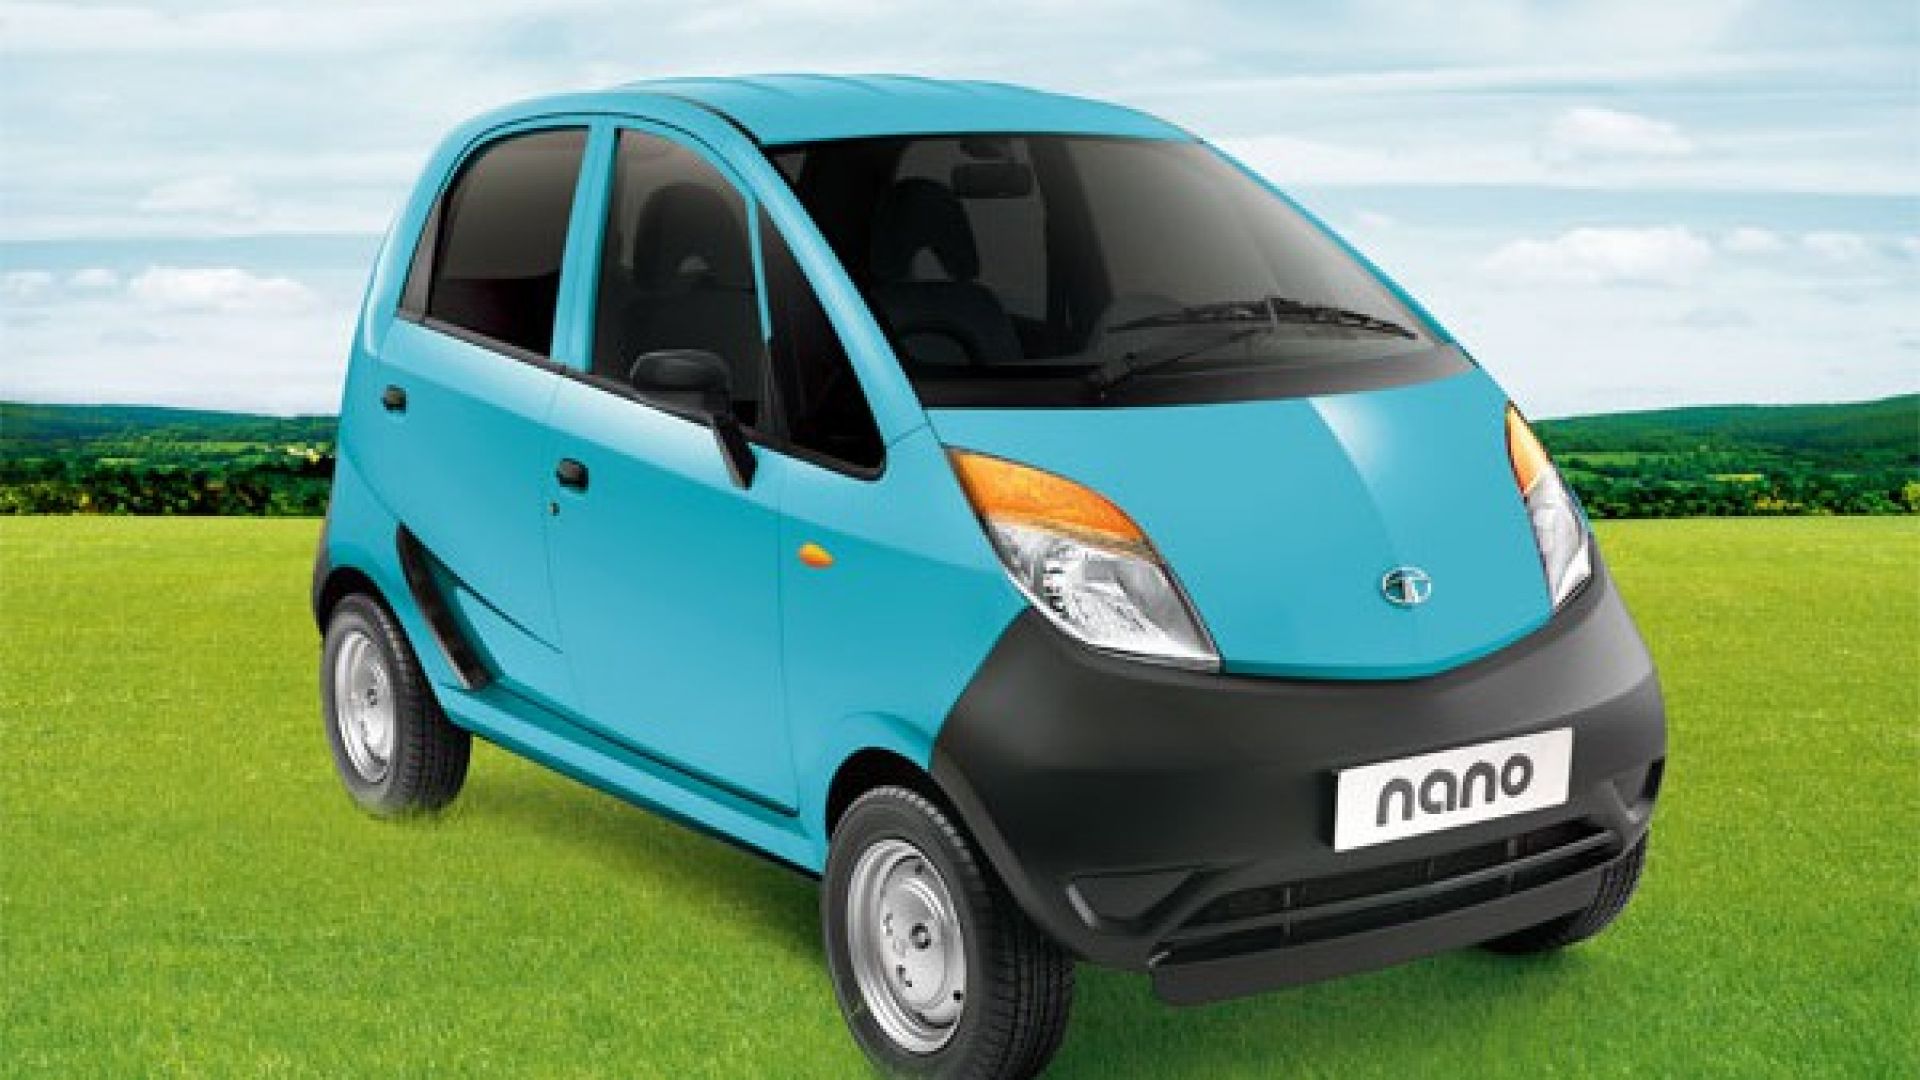 Недорогие б у иномарки. Tata Nano. Машина Tata Nano. Тата Индия авто. Малолитражки Tata.